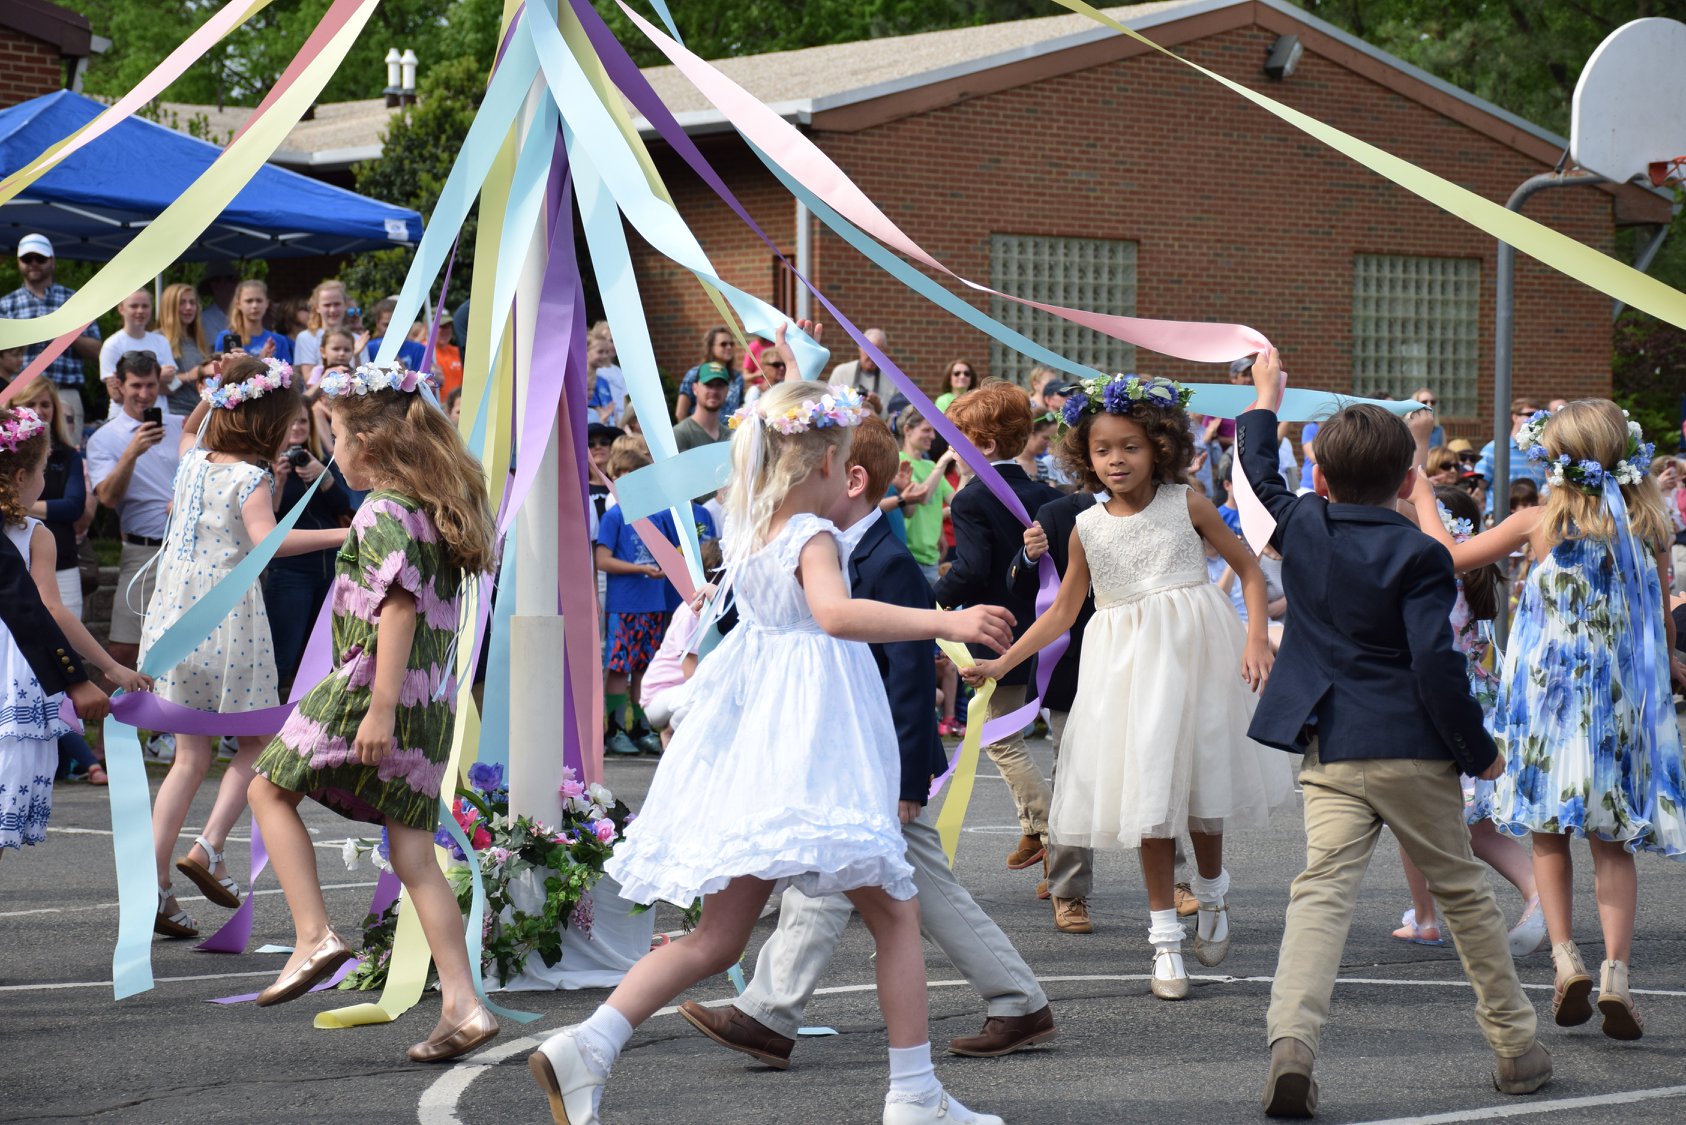 the kindergarten"s maypole dance is   longstanding tradition at